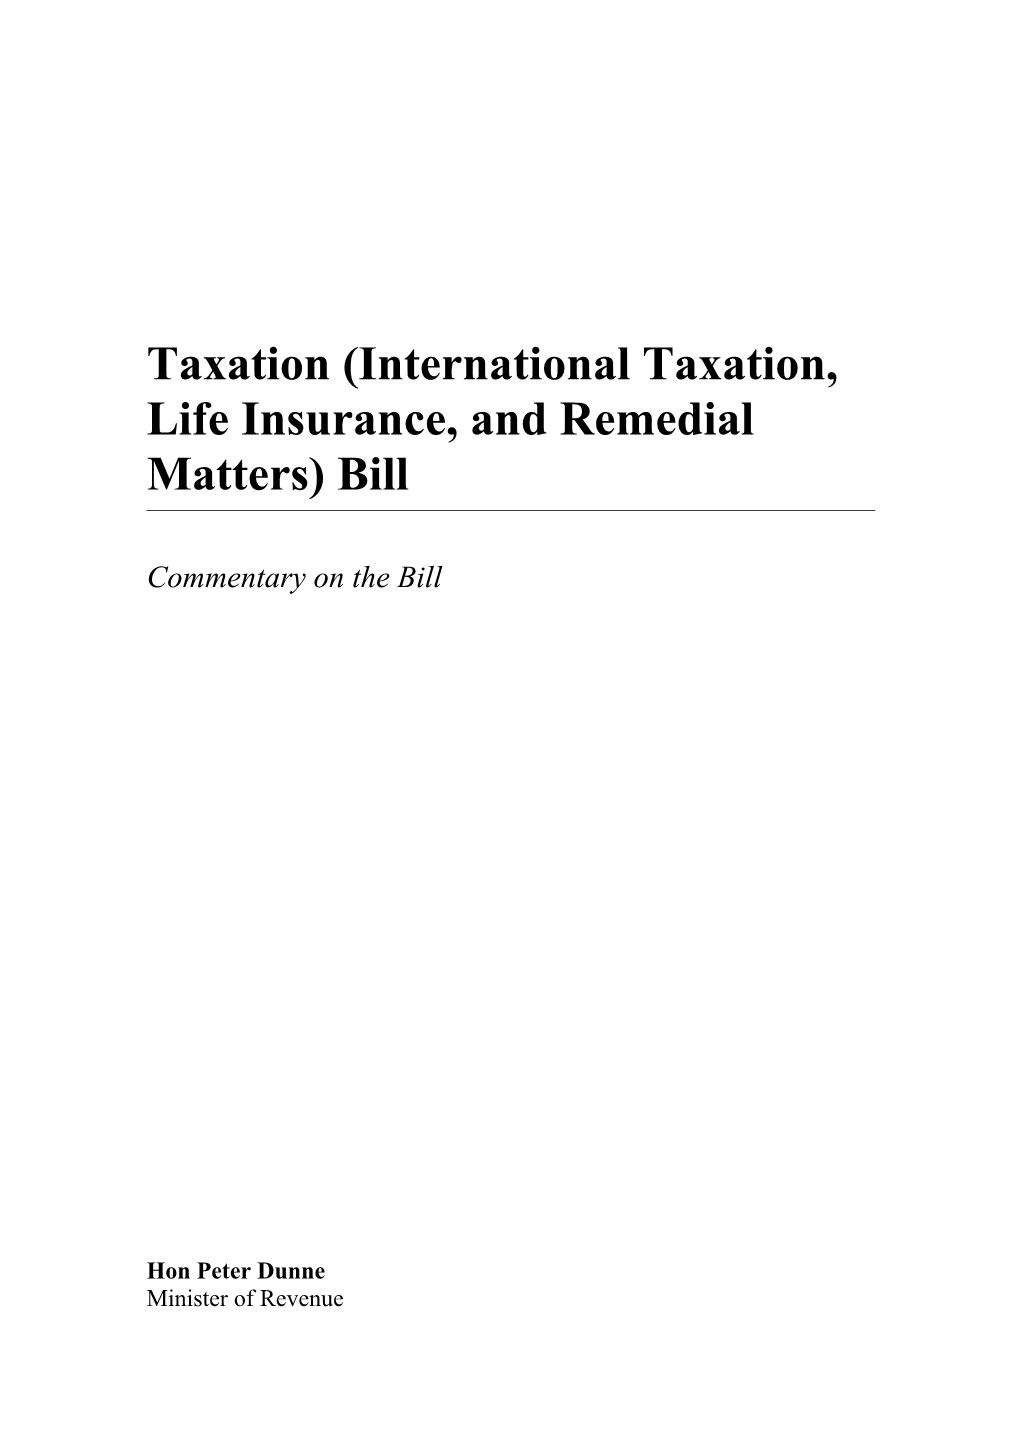 Taxation (International Taxation, Life Insurance, and Remedial Matters) Bill